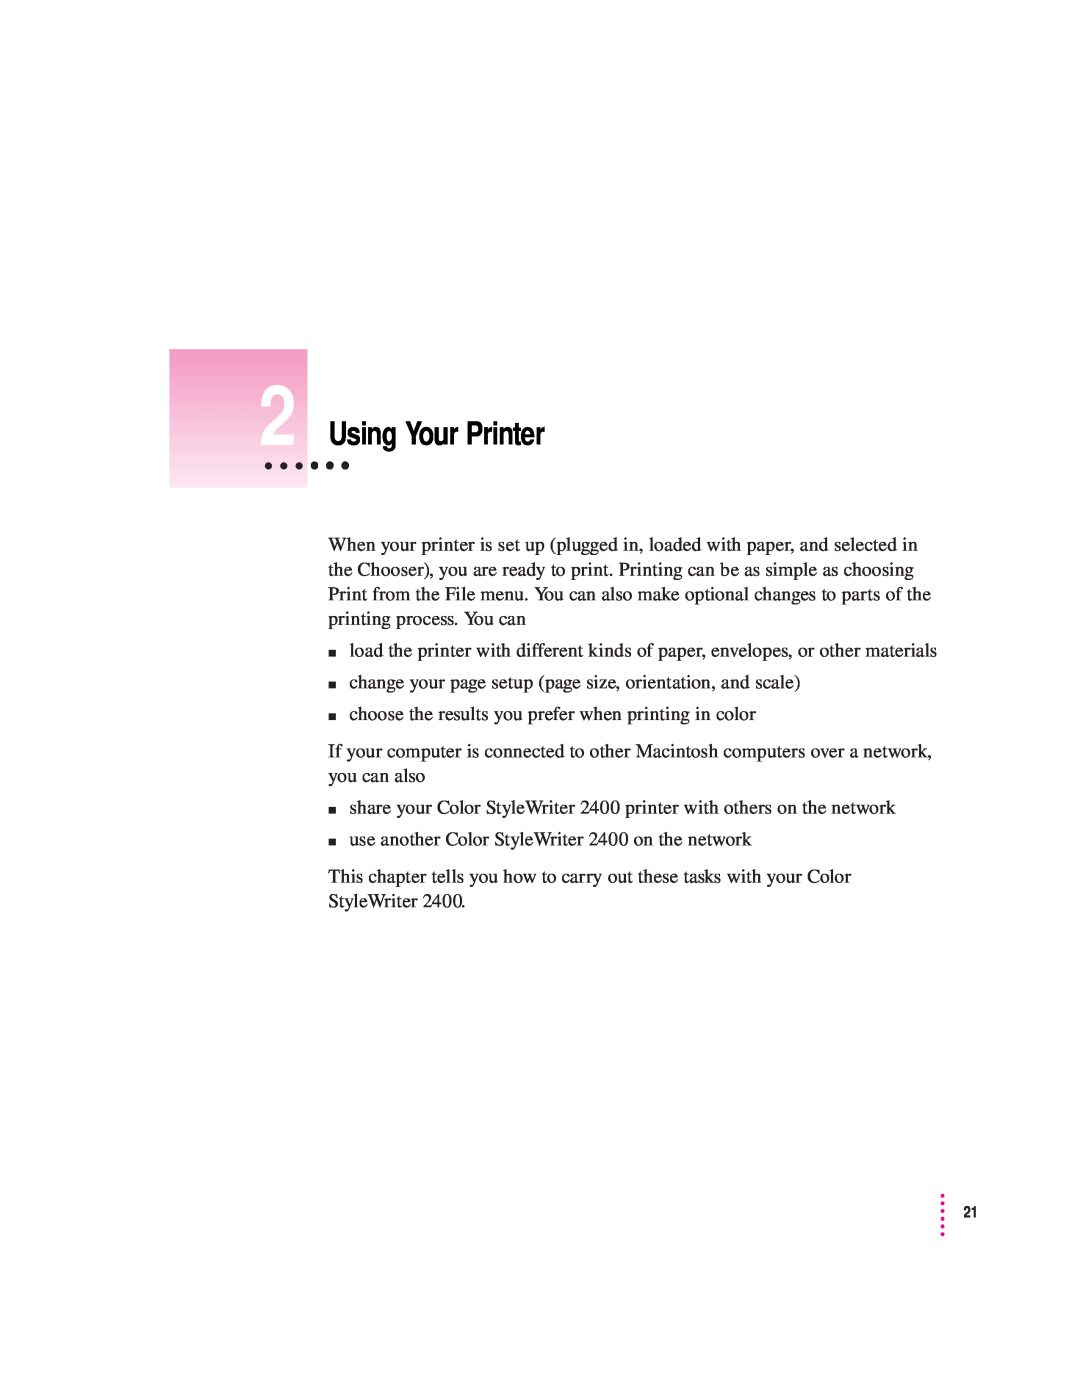 Apple 2400 manual Using Your Printer 